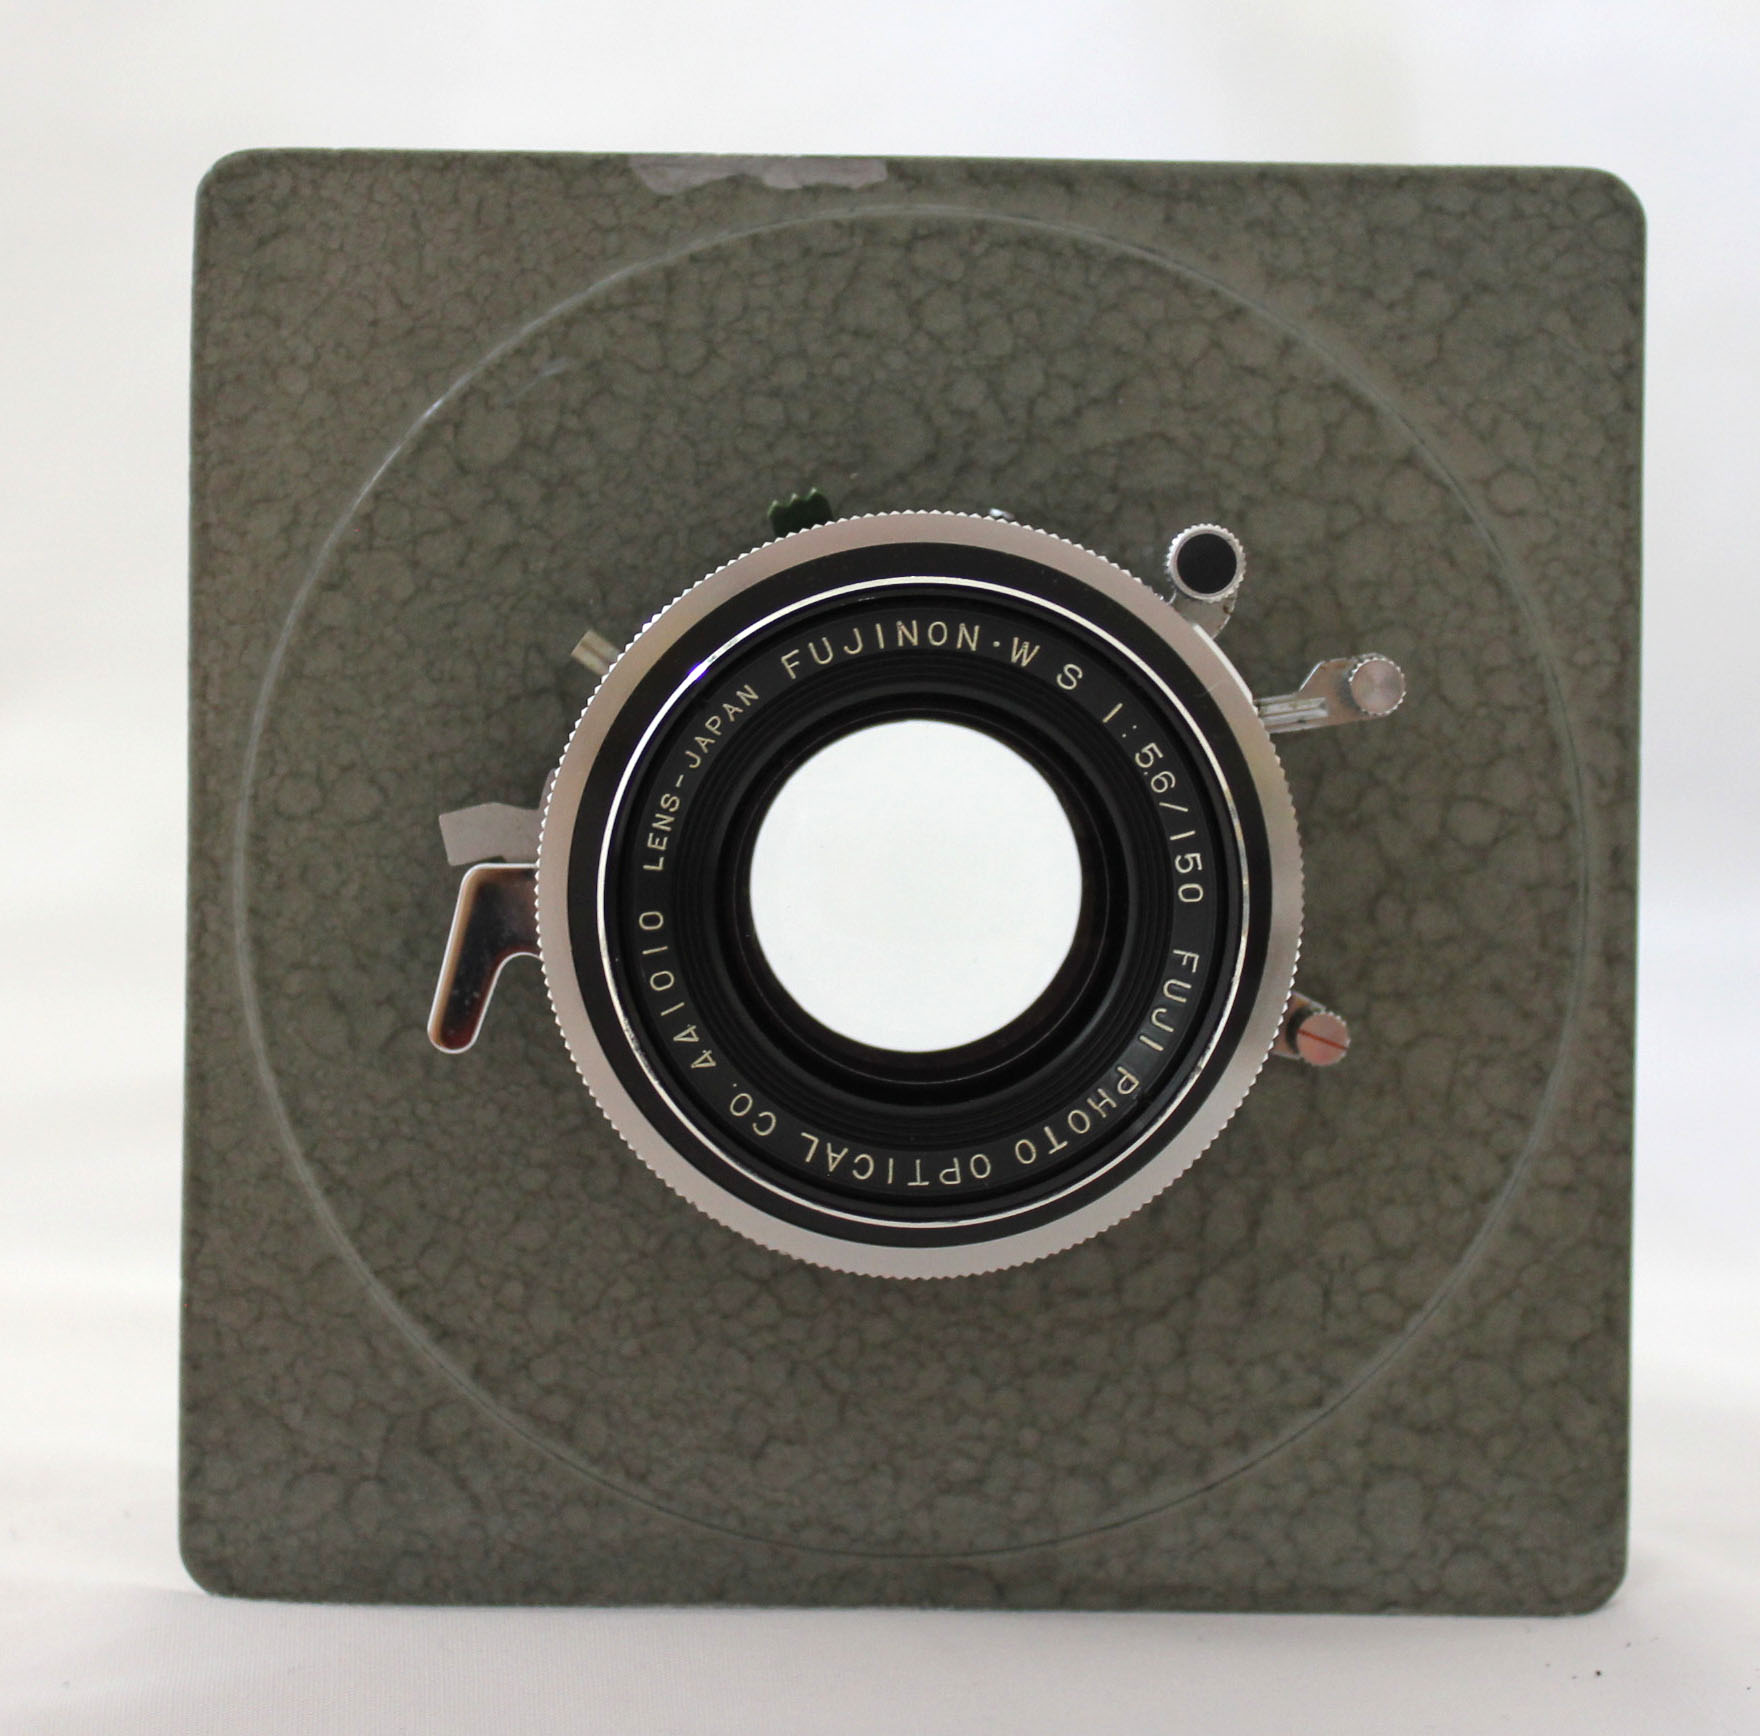 Fuji Fujinon W S 150mm F/5.6 Large Format Lens Seiko Shutter from Japan Photo 6